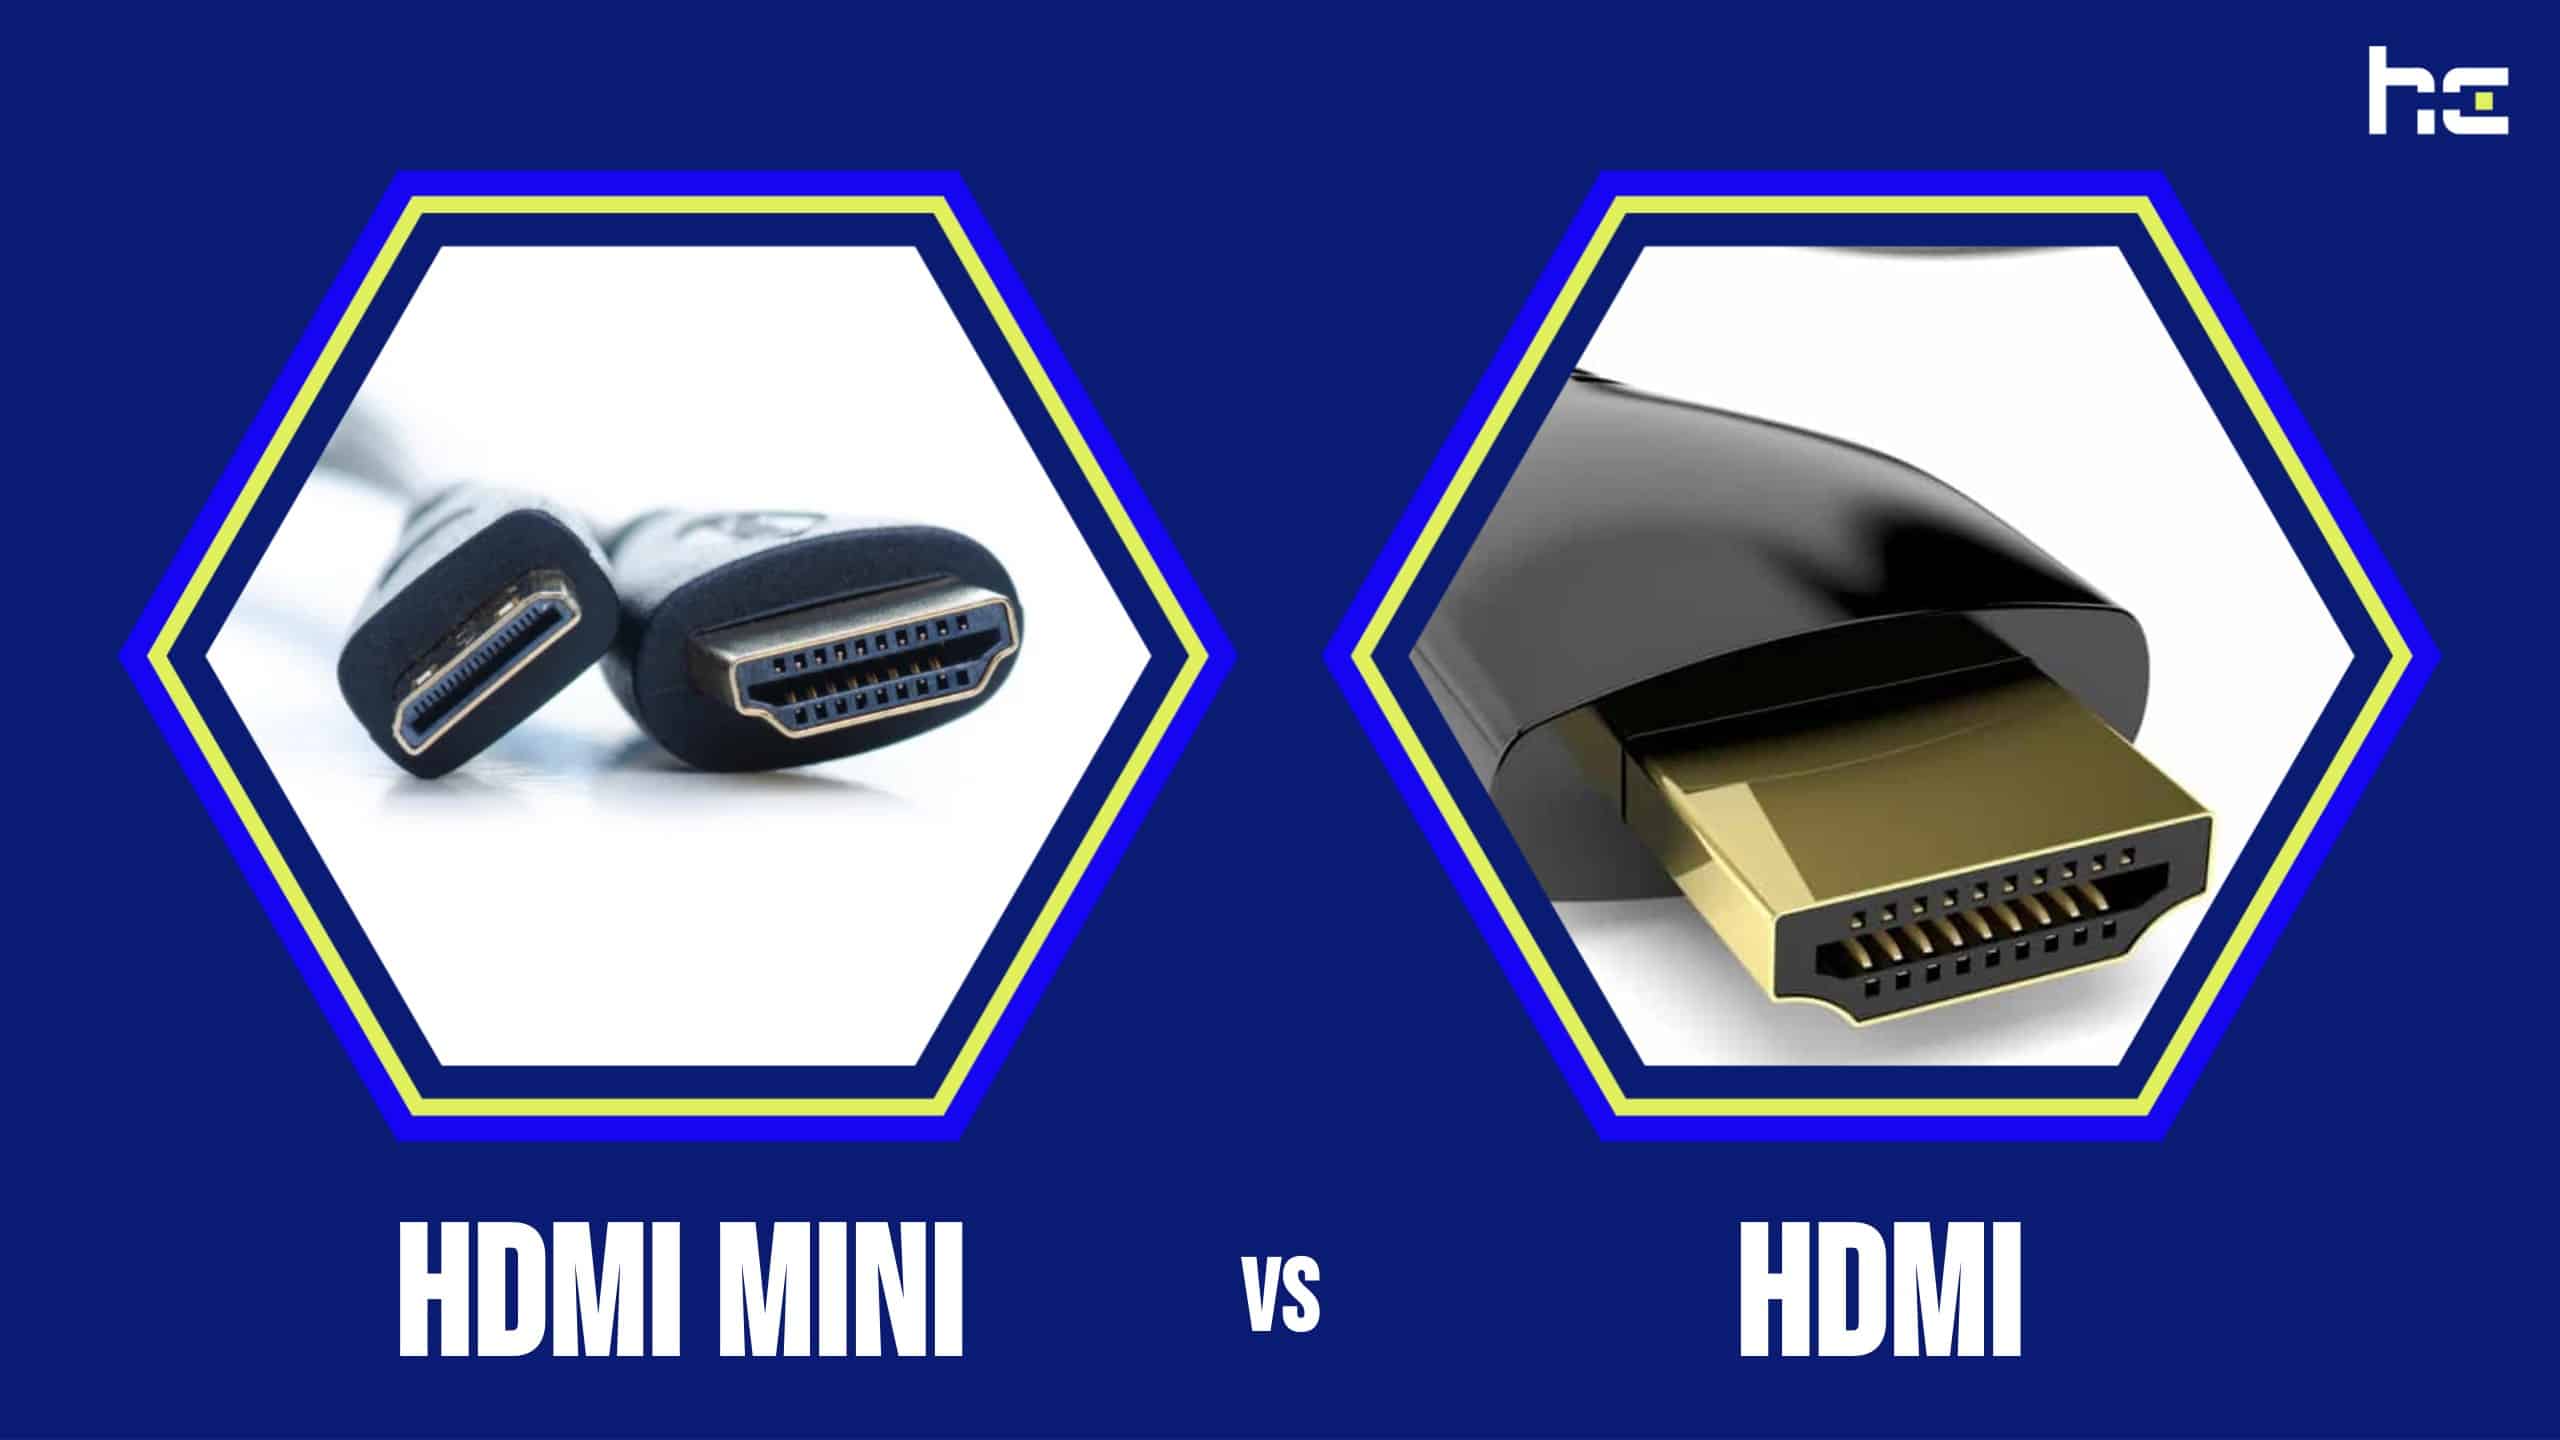 Ugreen câble mini-hdmi vers hdmi avec support 4K @ 60 Hz